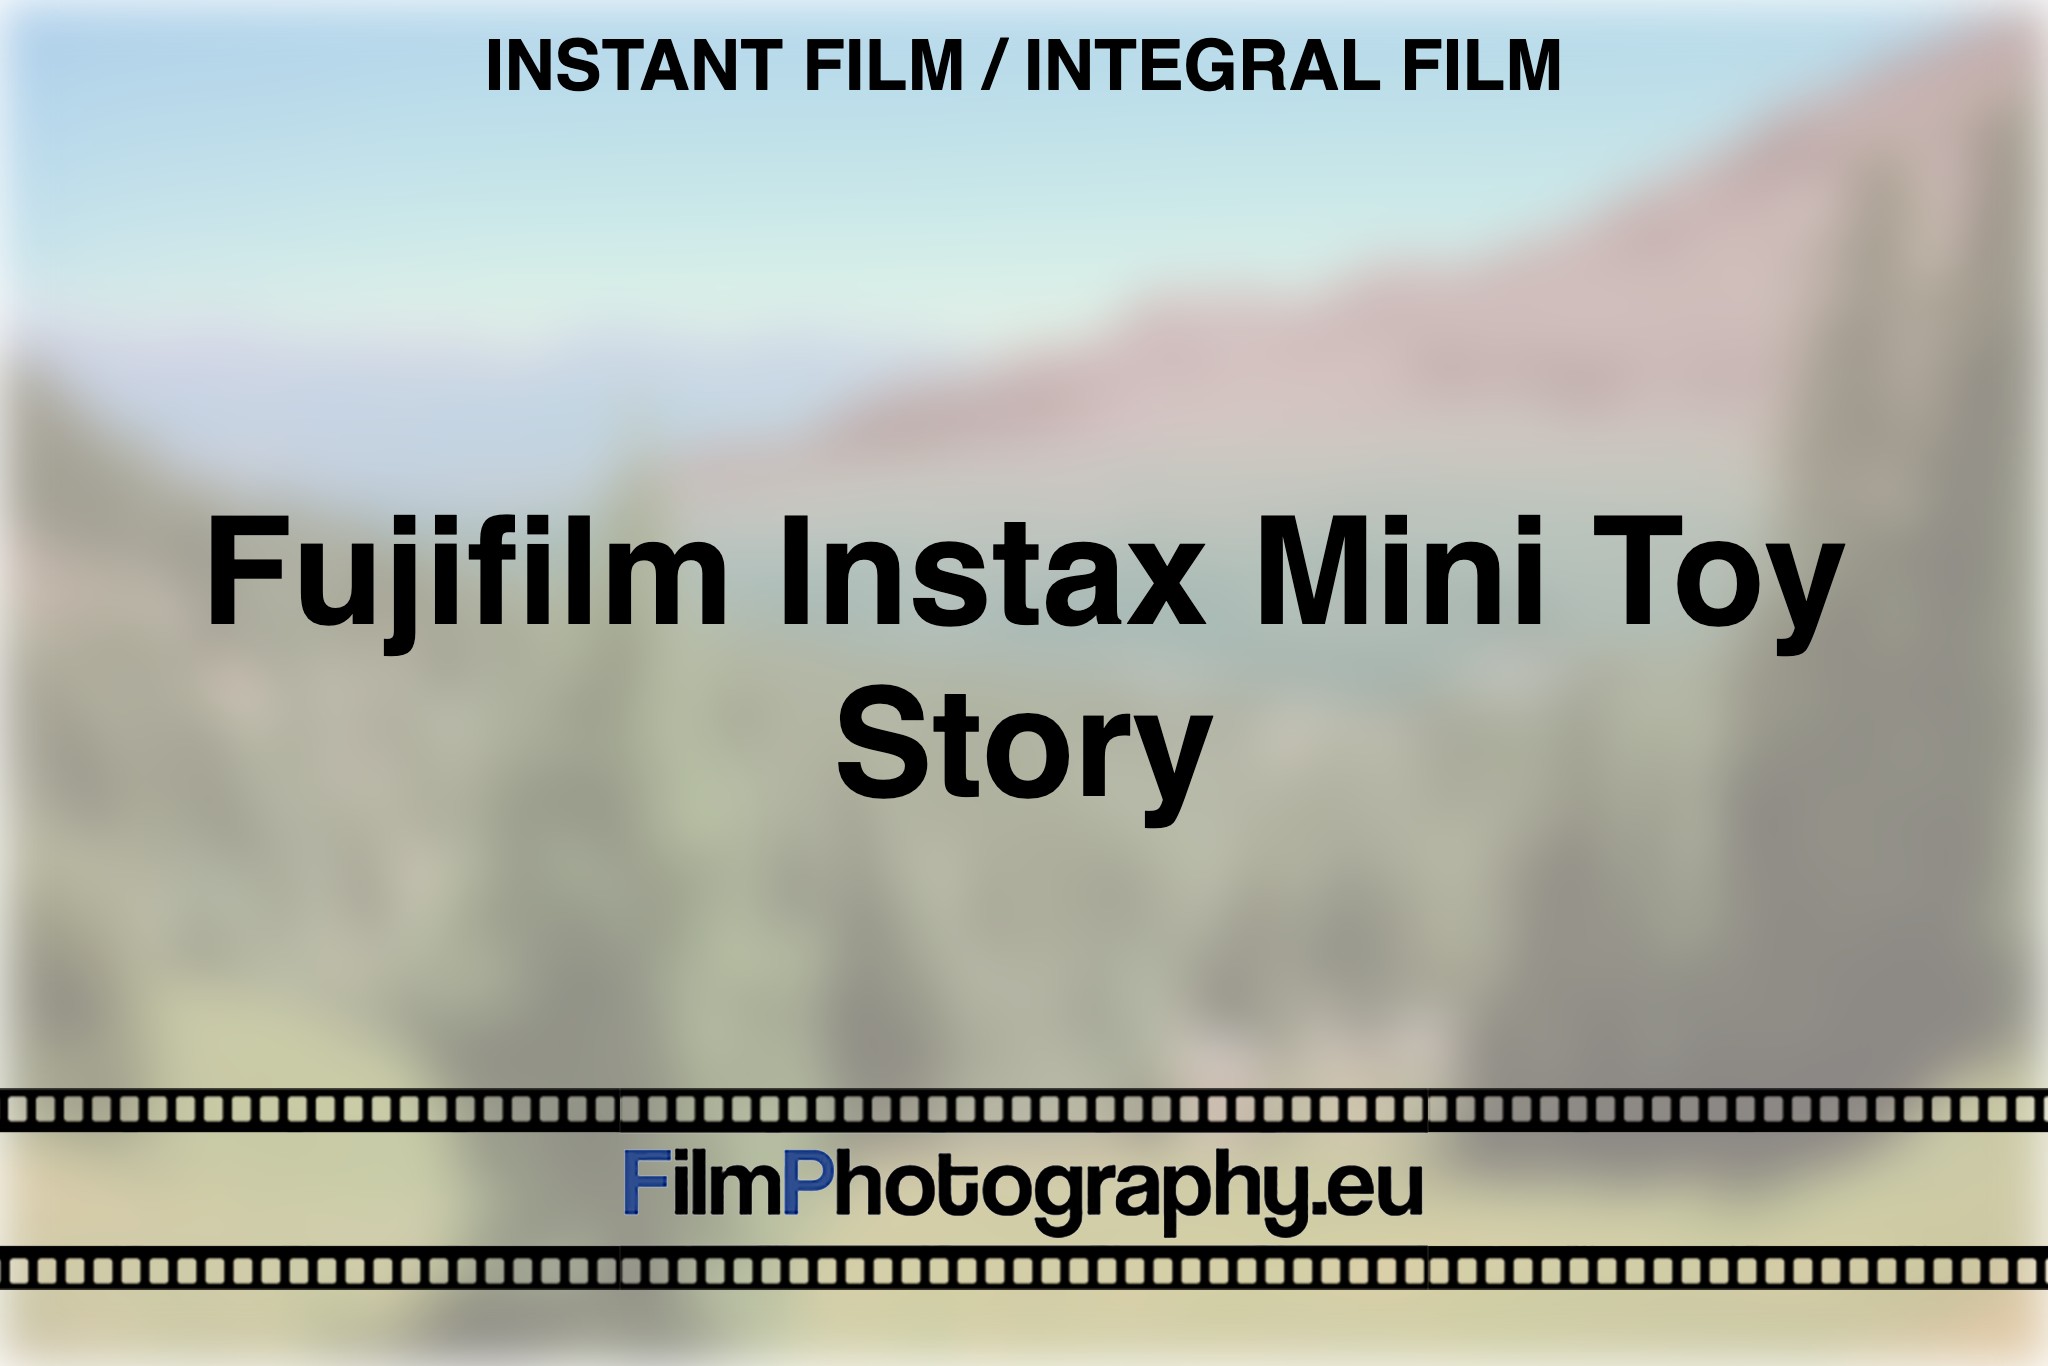 fujifilm-instax-mini-toy-story-instant-film-integral-film-bnv